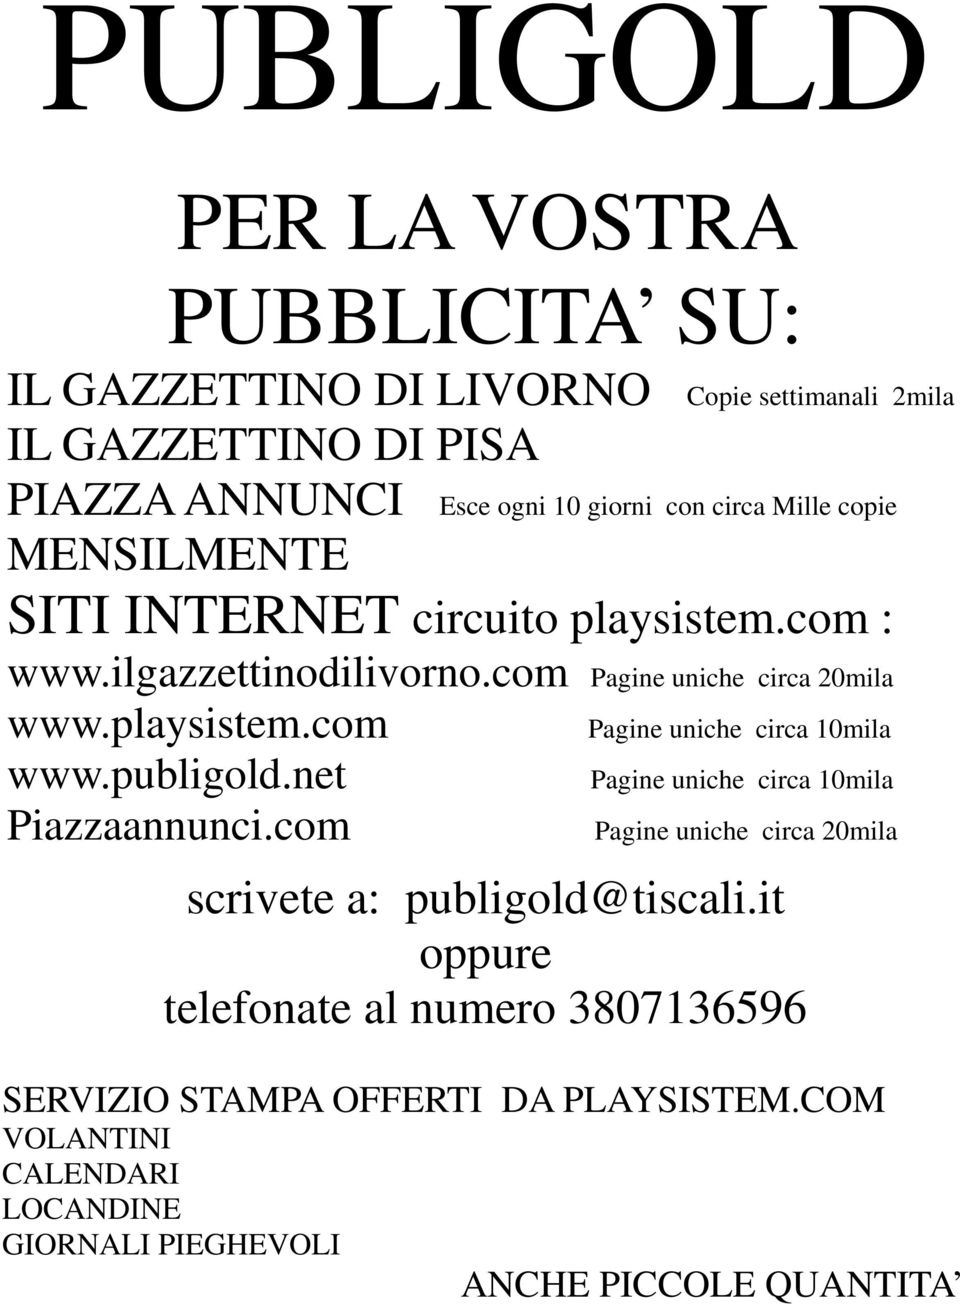 publigold.net Piazzaannunci.com Pagine uniche circa 10mila Pagine uniche circa 10mila Pagine uniche circa 20mila scrivete a: publigold@tiscali.